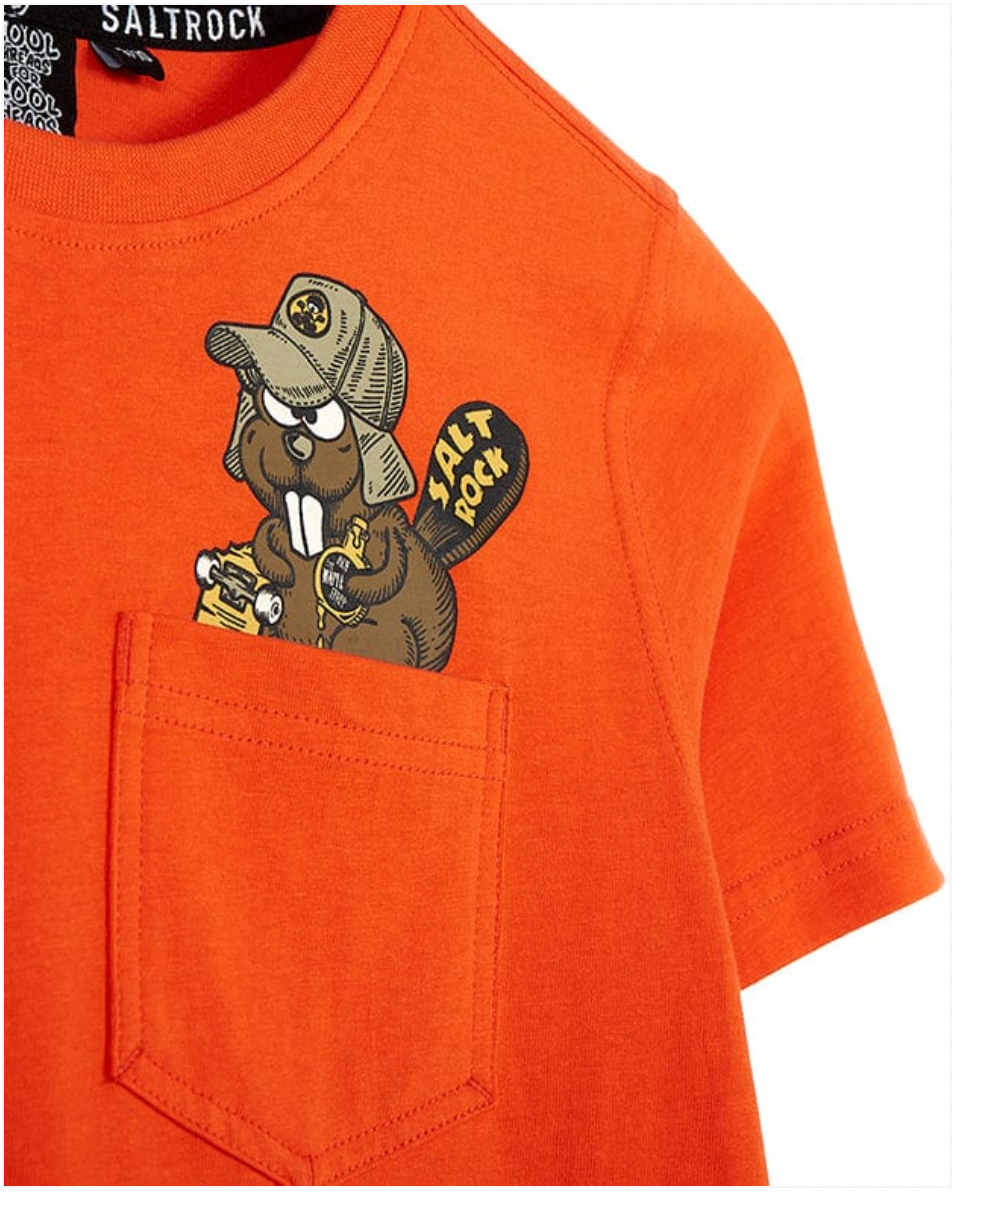 SALTROCK Beavering Around - Kids Short Sleeve T-Shirt - Orange